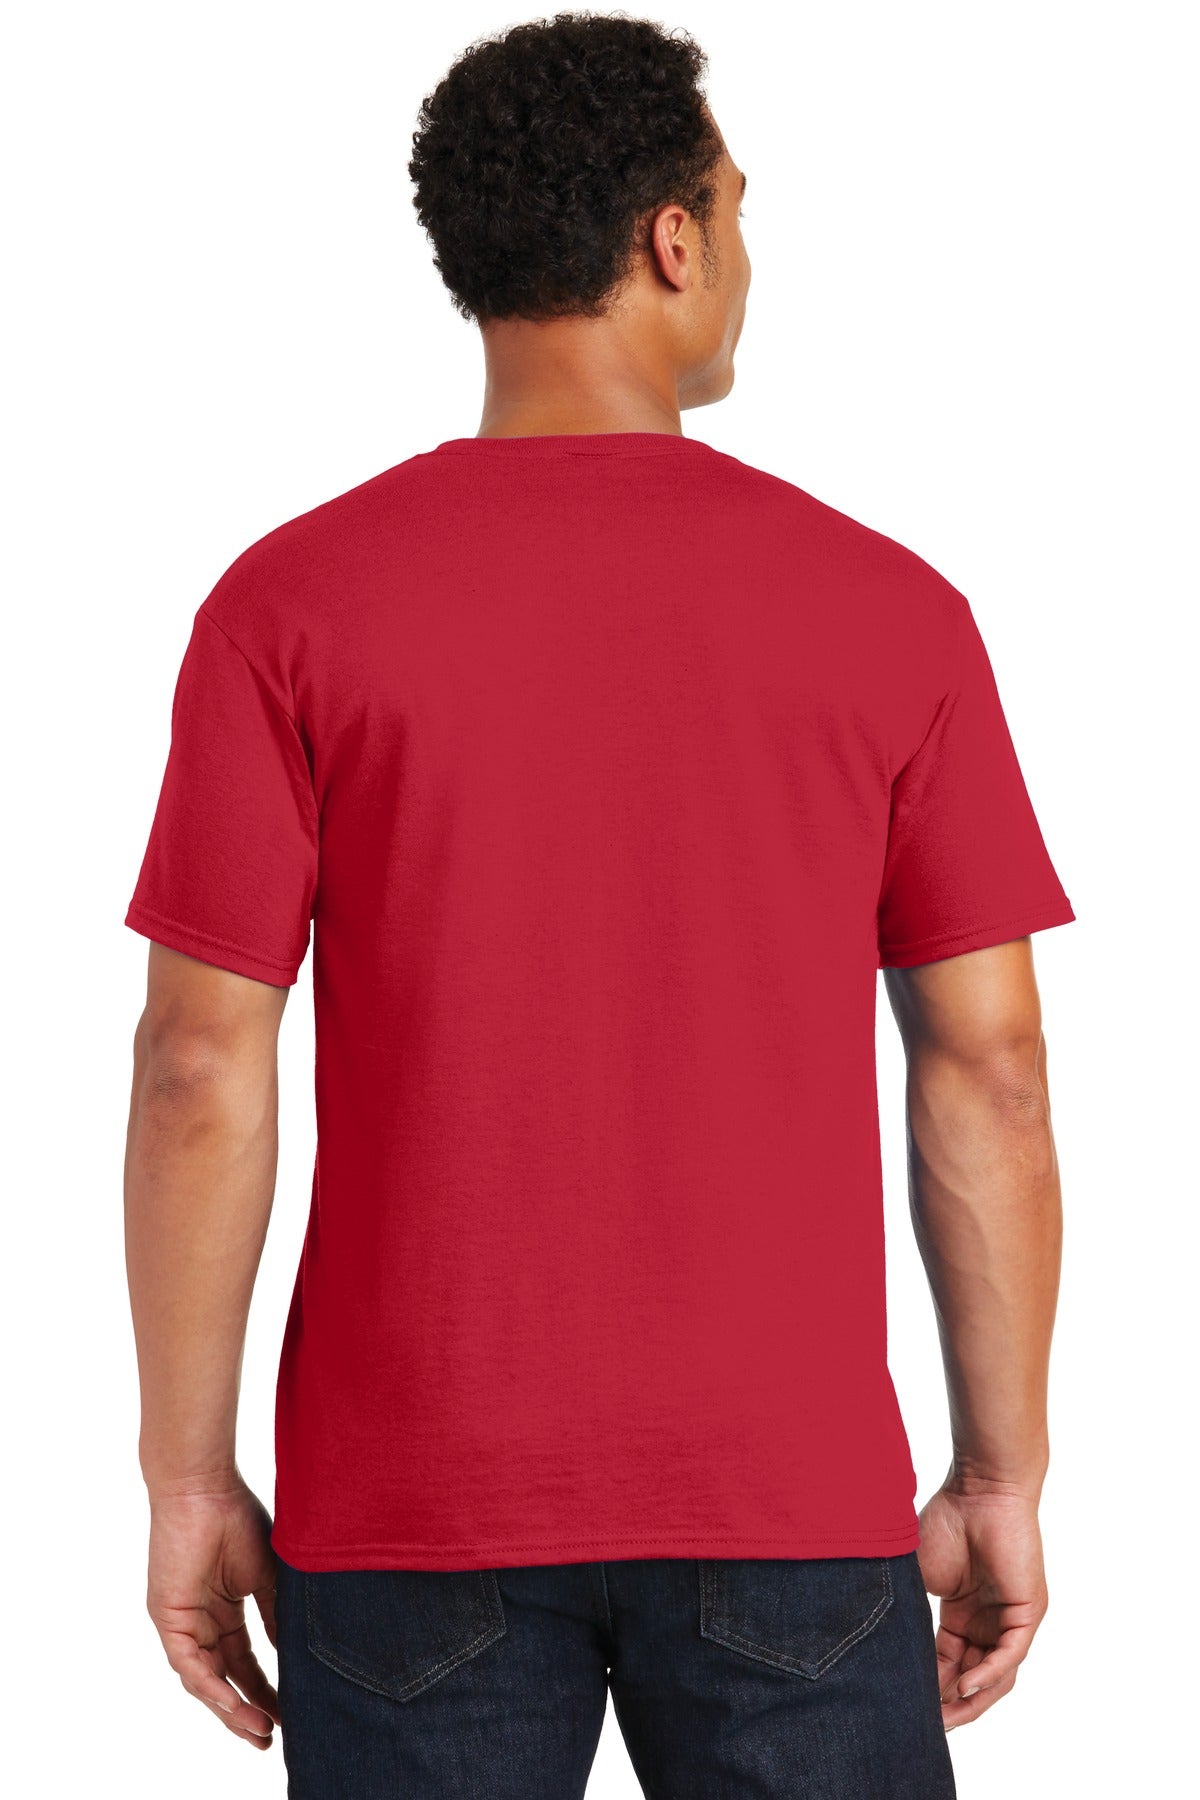 JERZEES® - Dri-Power® 50/50 Cotton/Poly T-Shirt. 29M [True Red] - DFW Impression